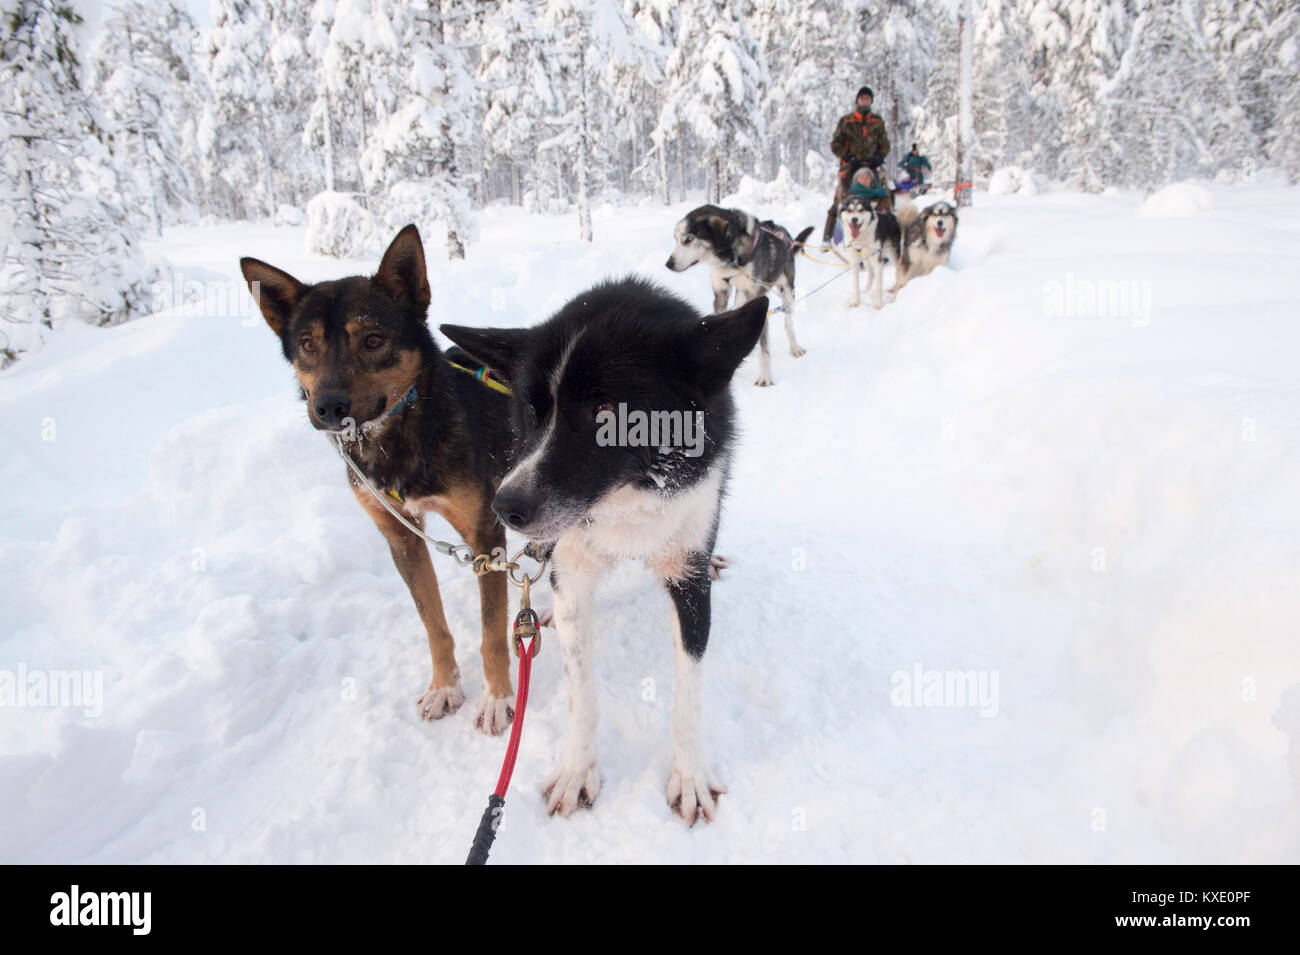 Mush dogs on break during dog sledding in Swedish winter forest. Stock Photo